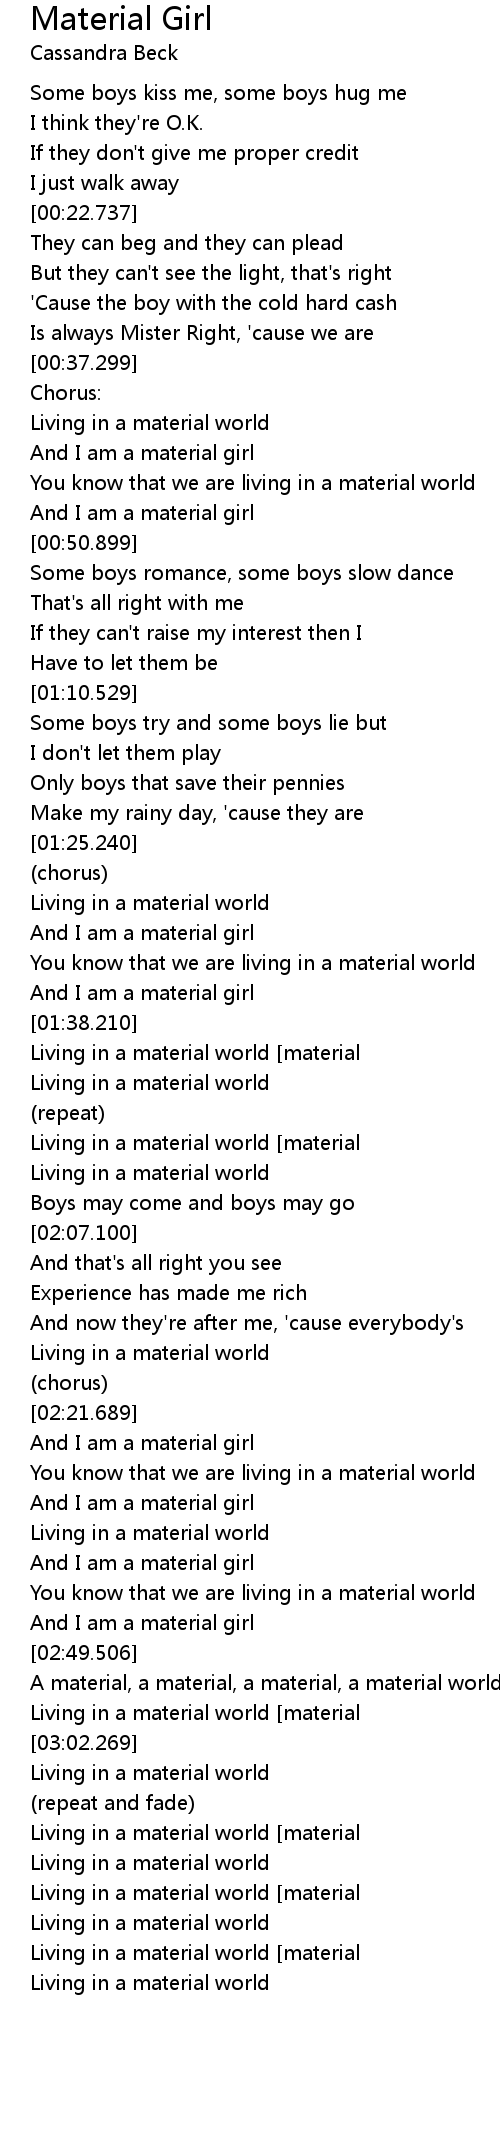 Material girl lyrics